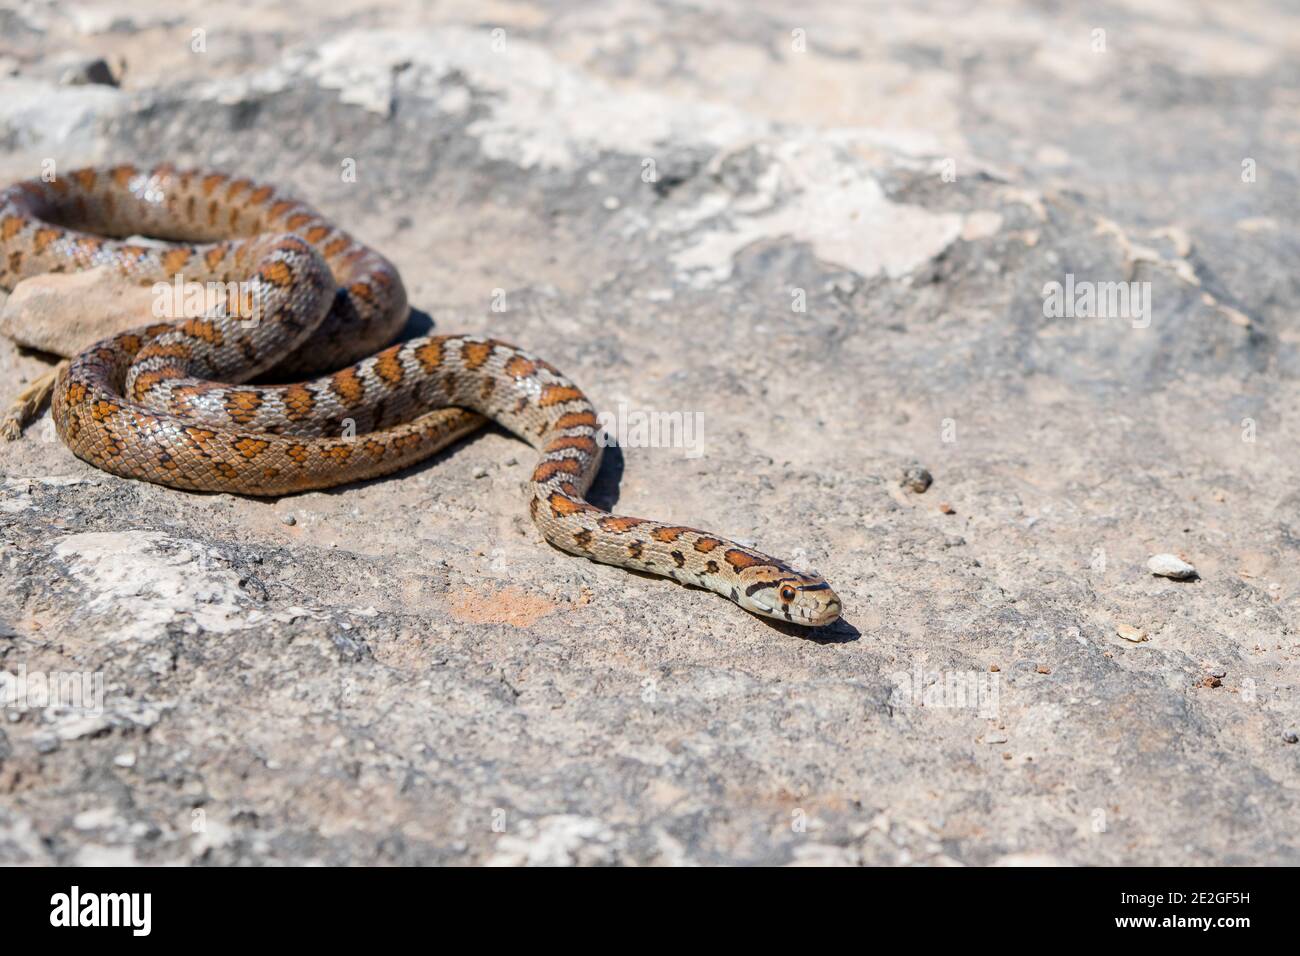 An adult Leopard Snake or European Ratsnake, Zamenis situla, slithering on rocks in Malta Stock Photo